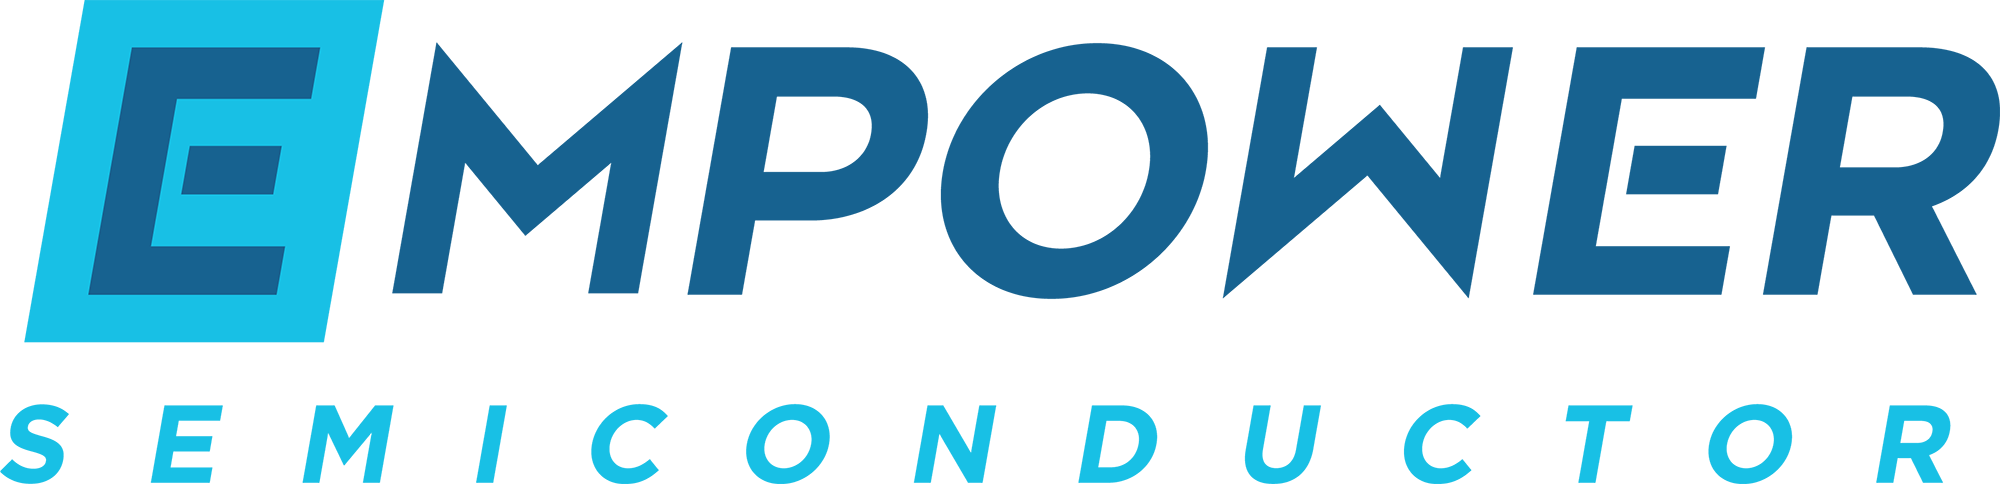 Empower Semi logo